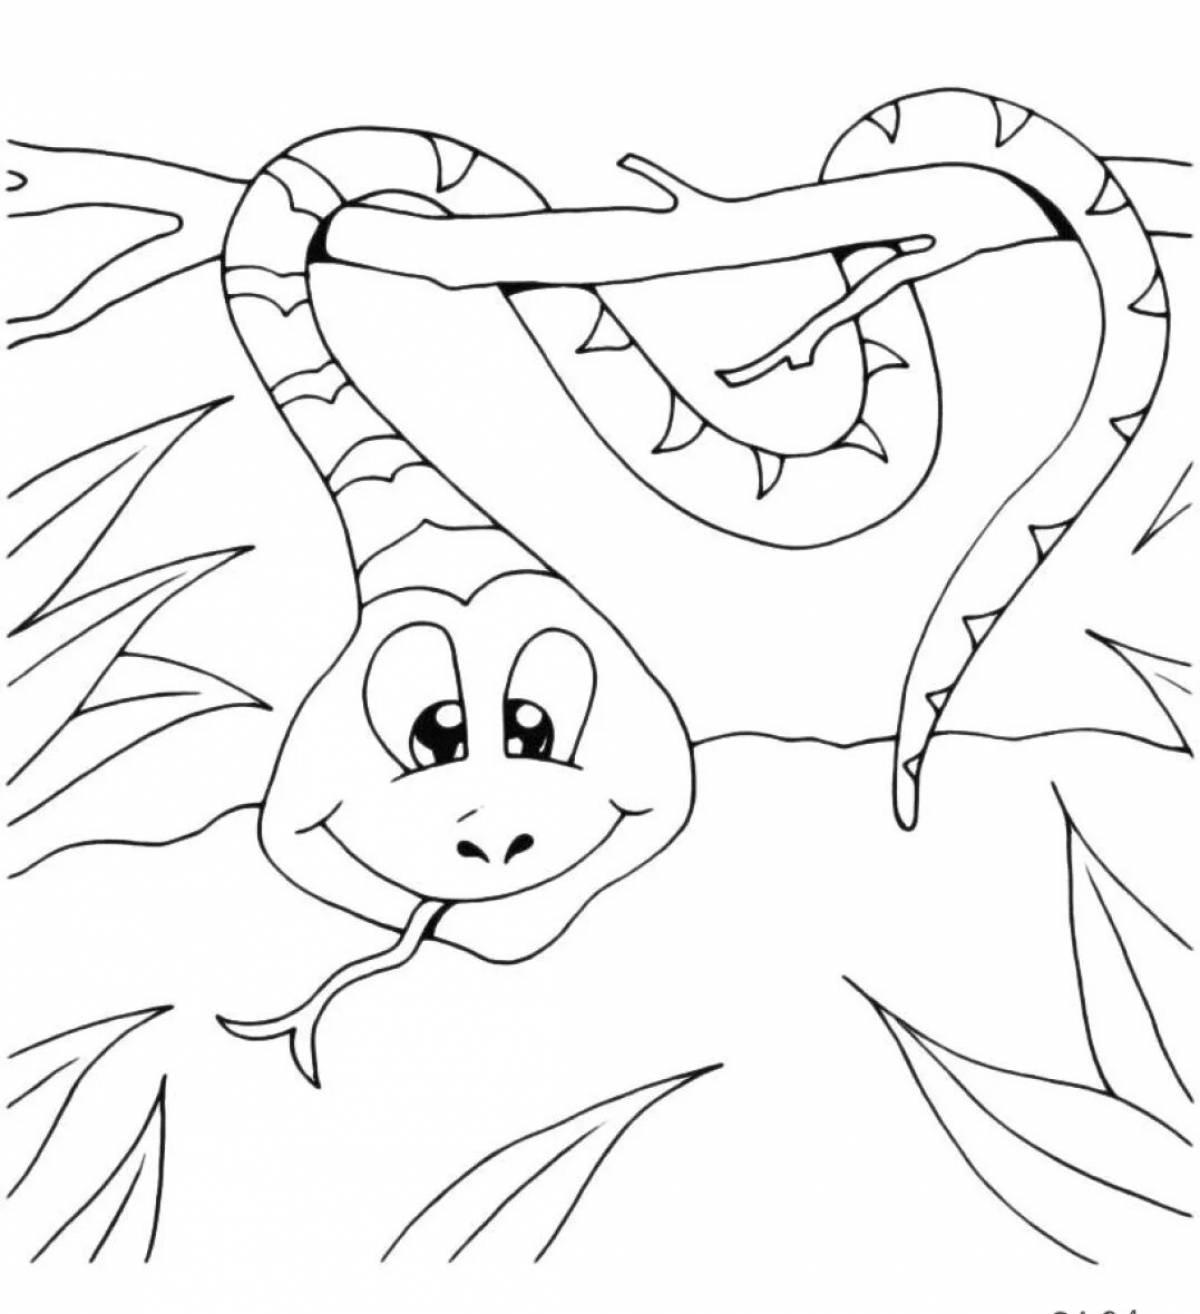 Задания про змей. Змея раскраска. Змея раскраска для детей. Раскраска змеи для детей. Рисунок змеи для детей.